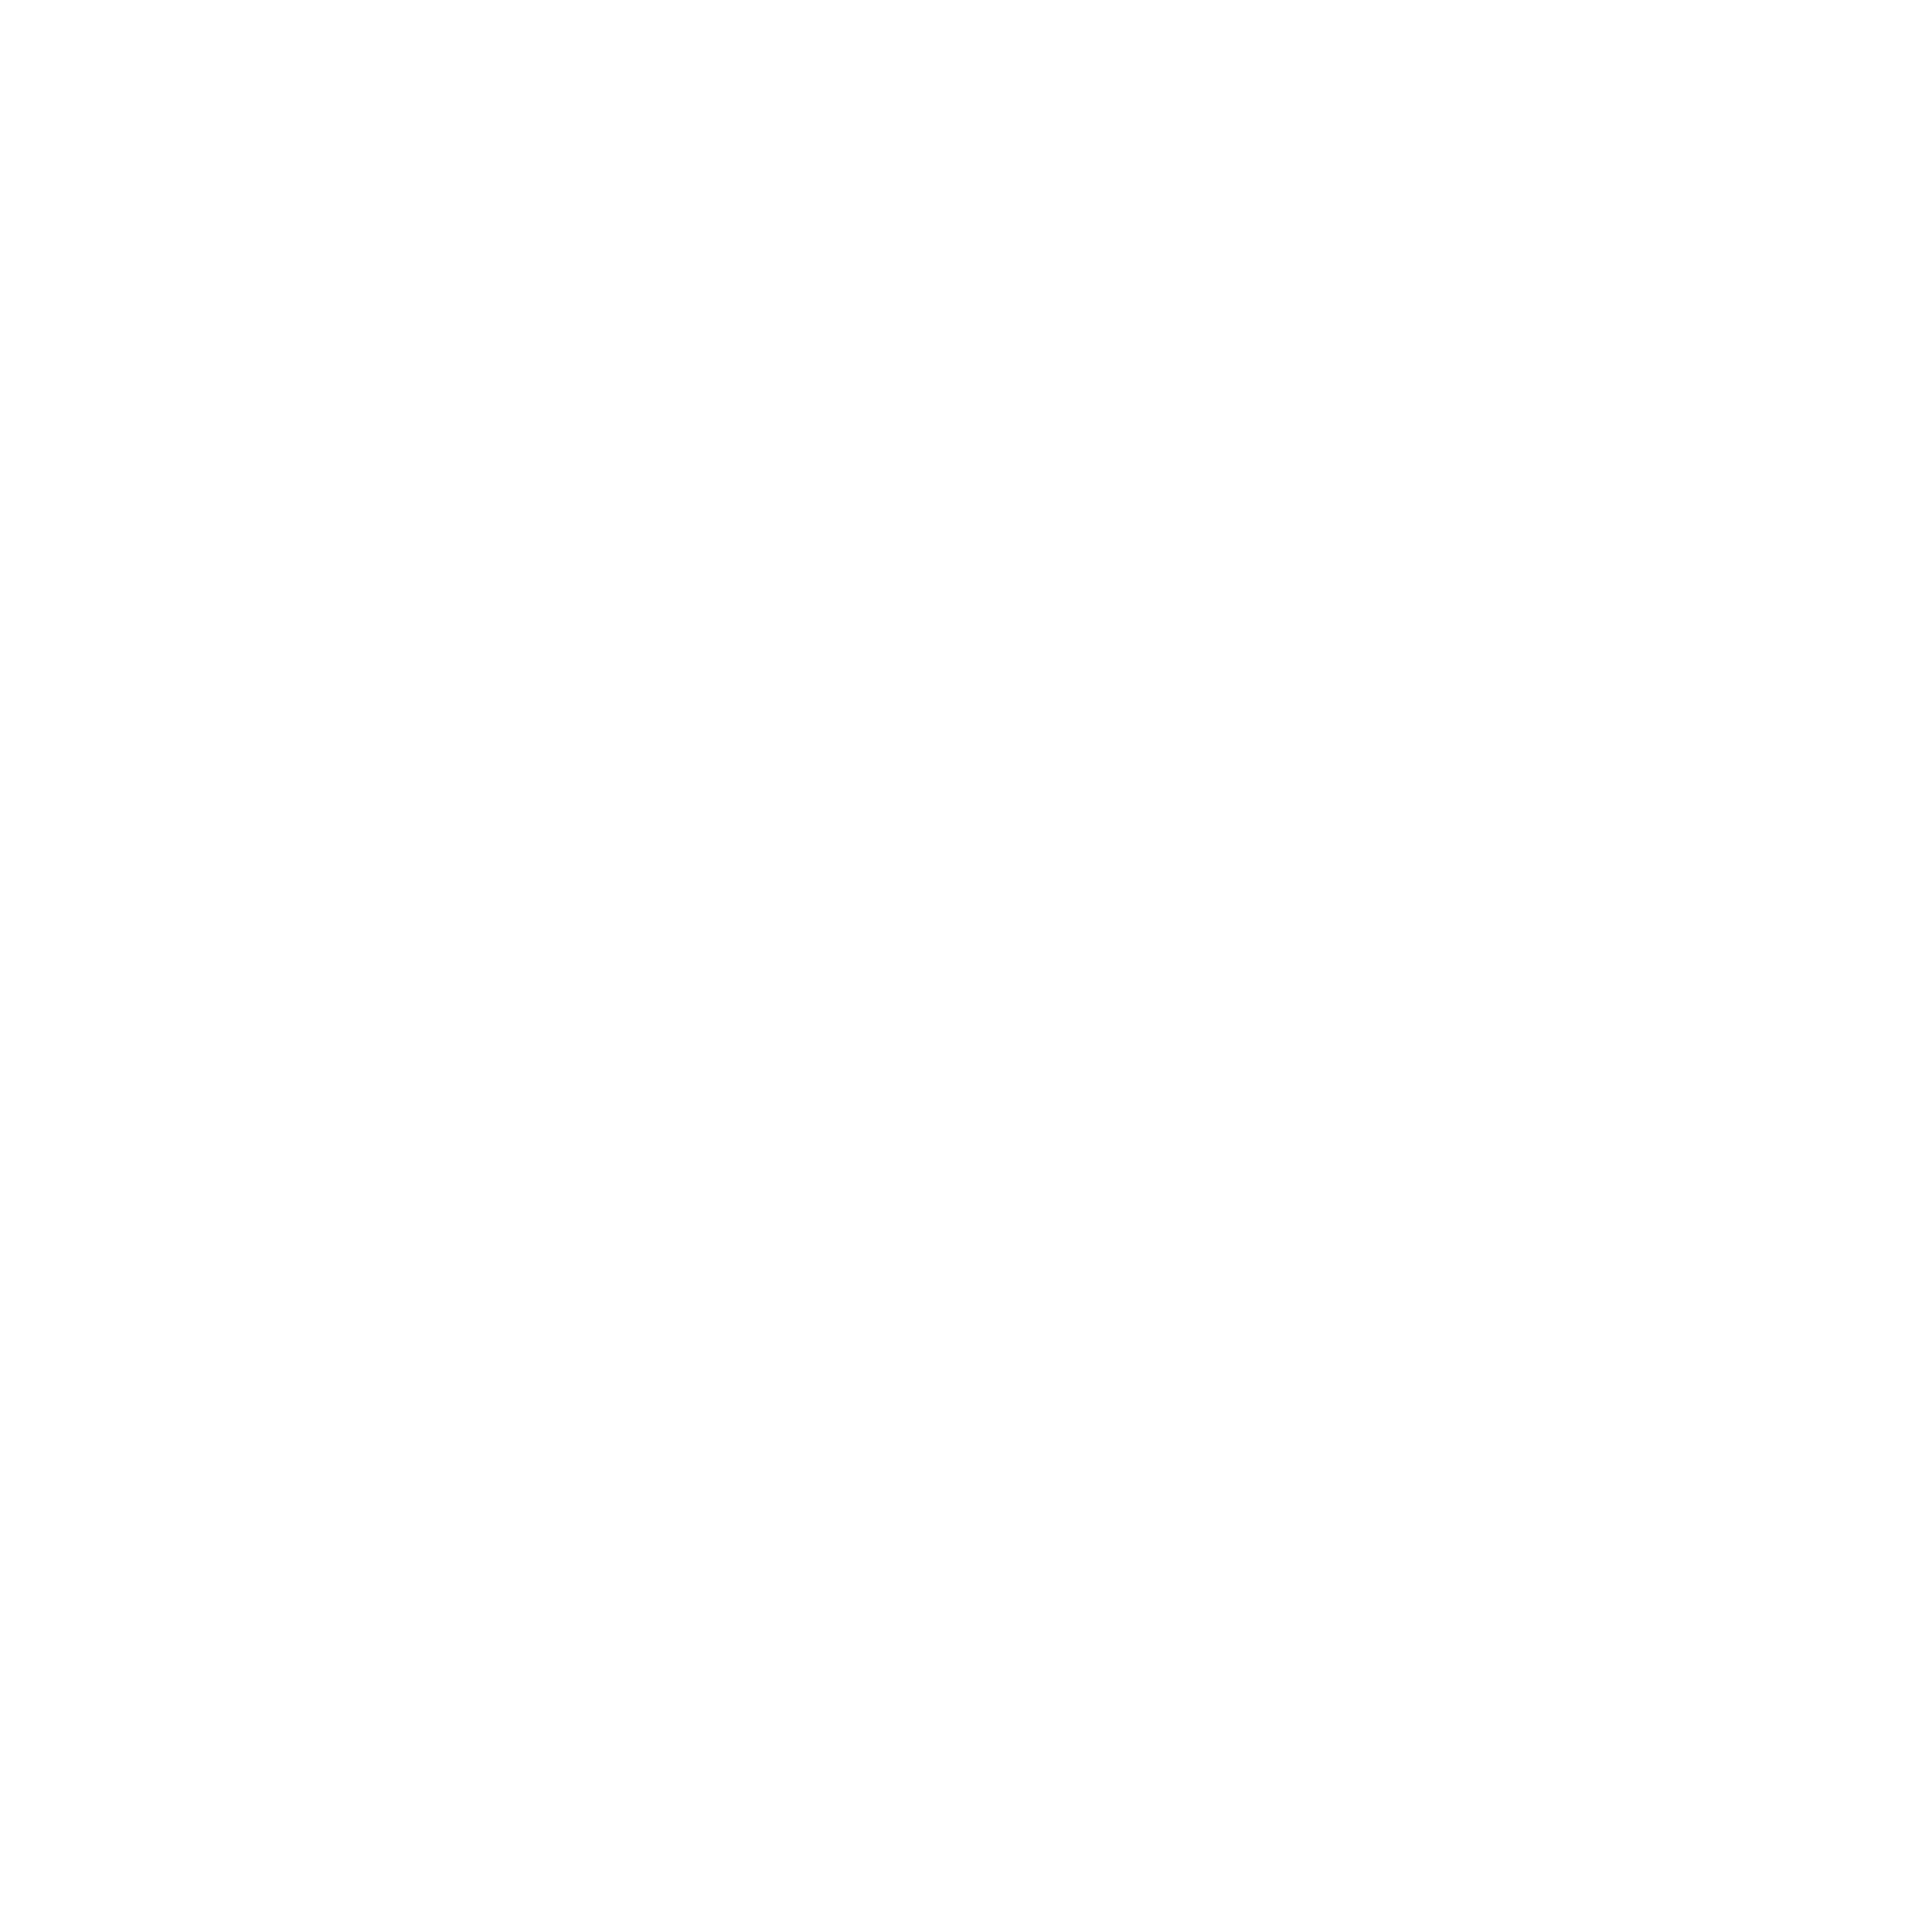 lawn-mower-icon-01